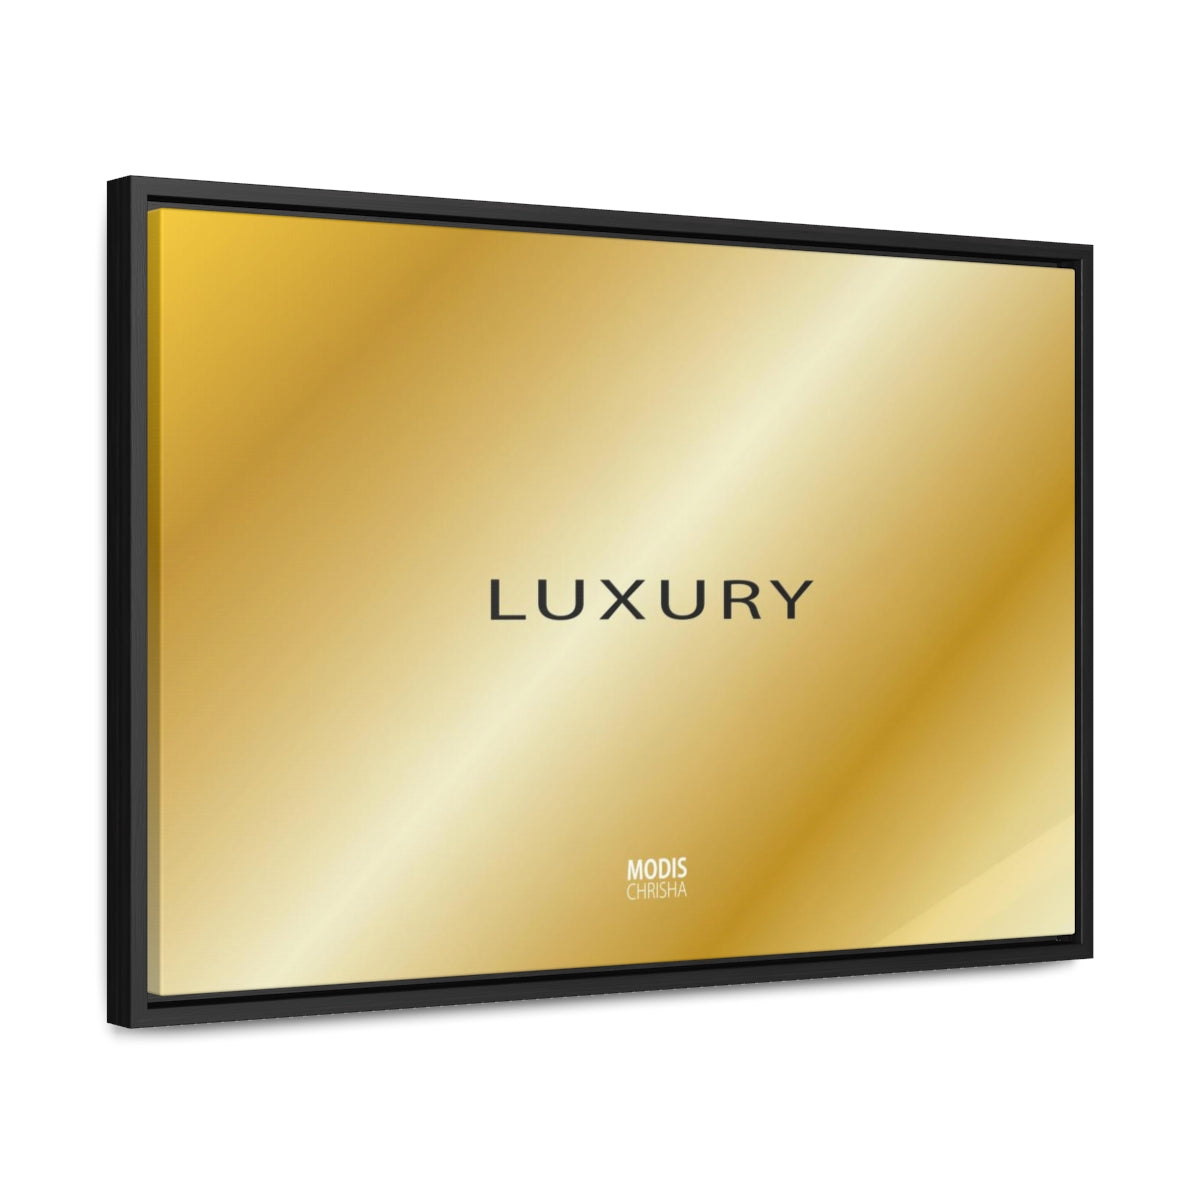 Canvas Gallery Wraps Frame Horizontal 24“ x 16“ - Design Luxury